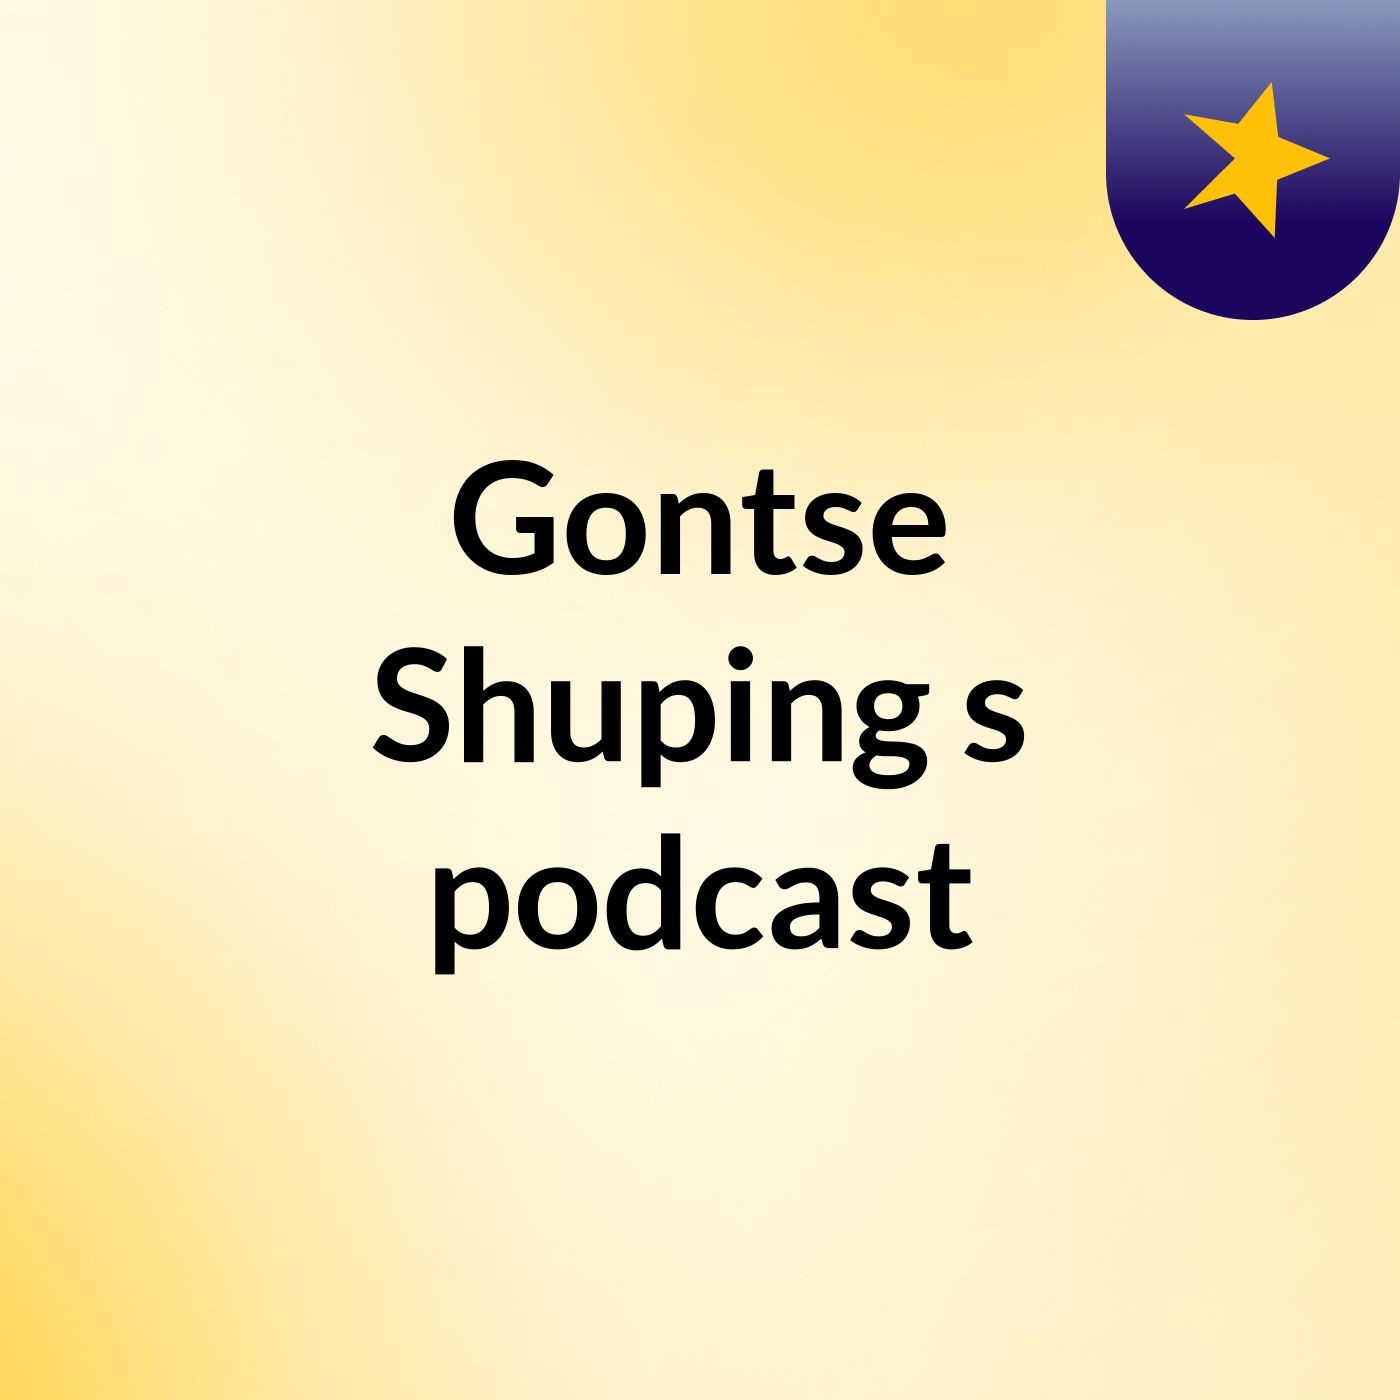 Gontse Shuping's podcast